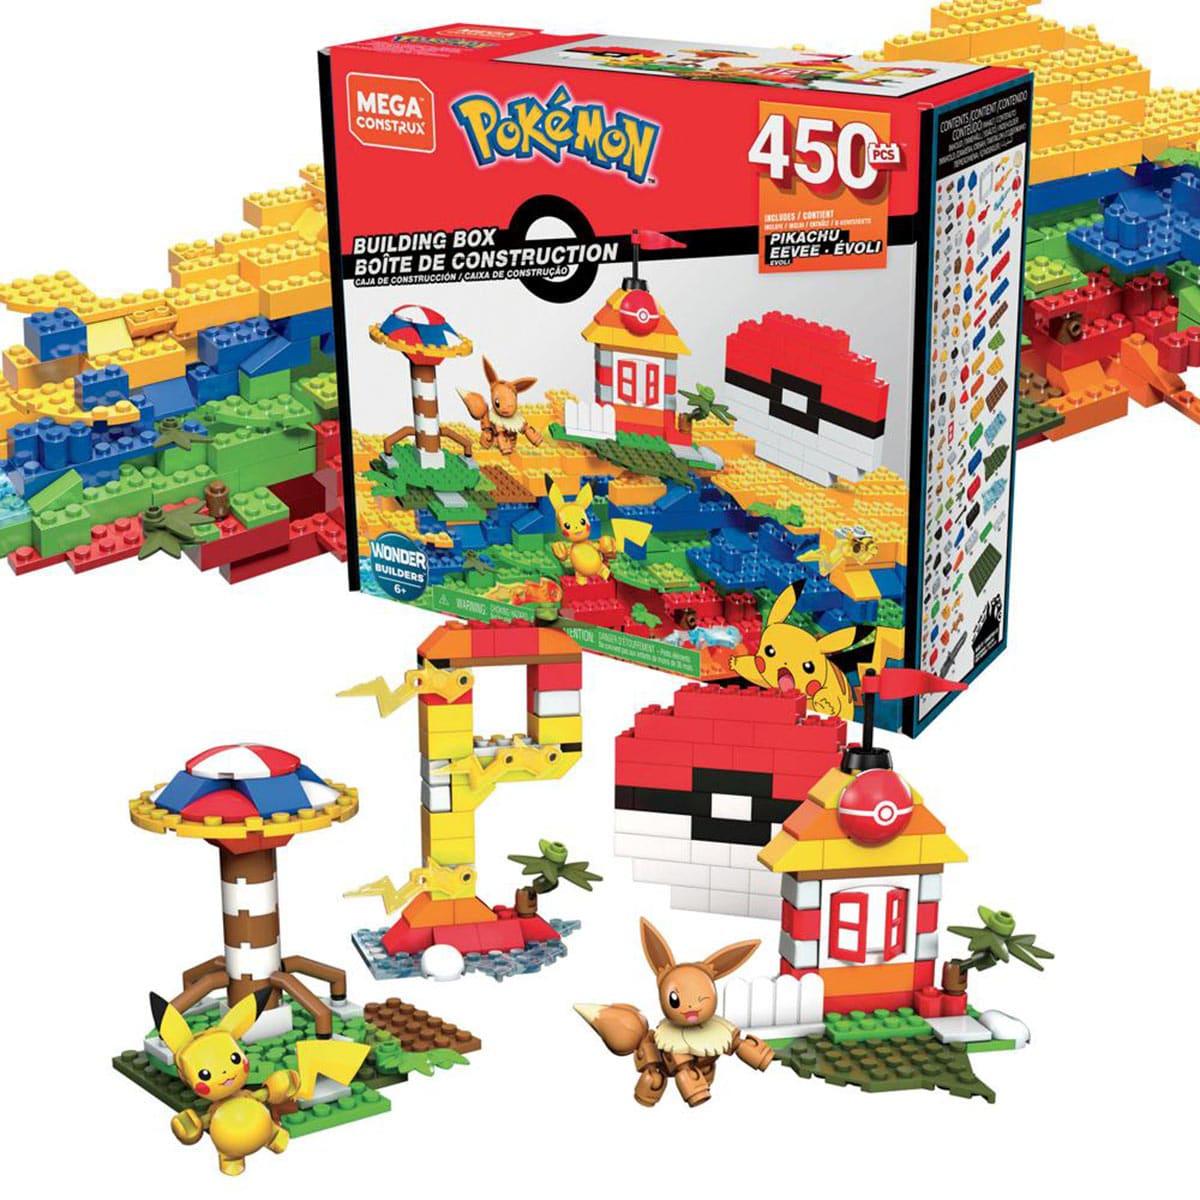 JOUET K.I.D. INC. Toys & Games Mega Construx™ Pokémon, Building Box